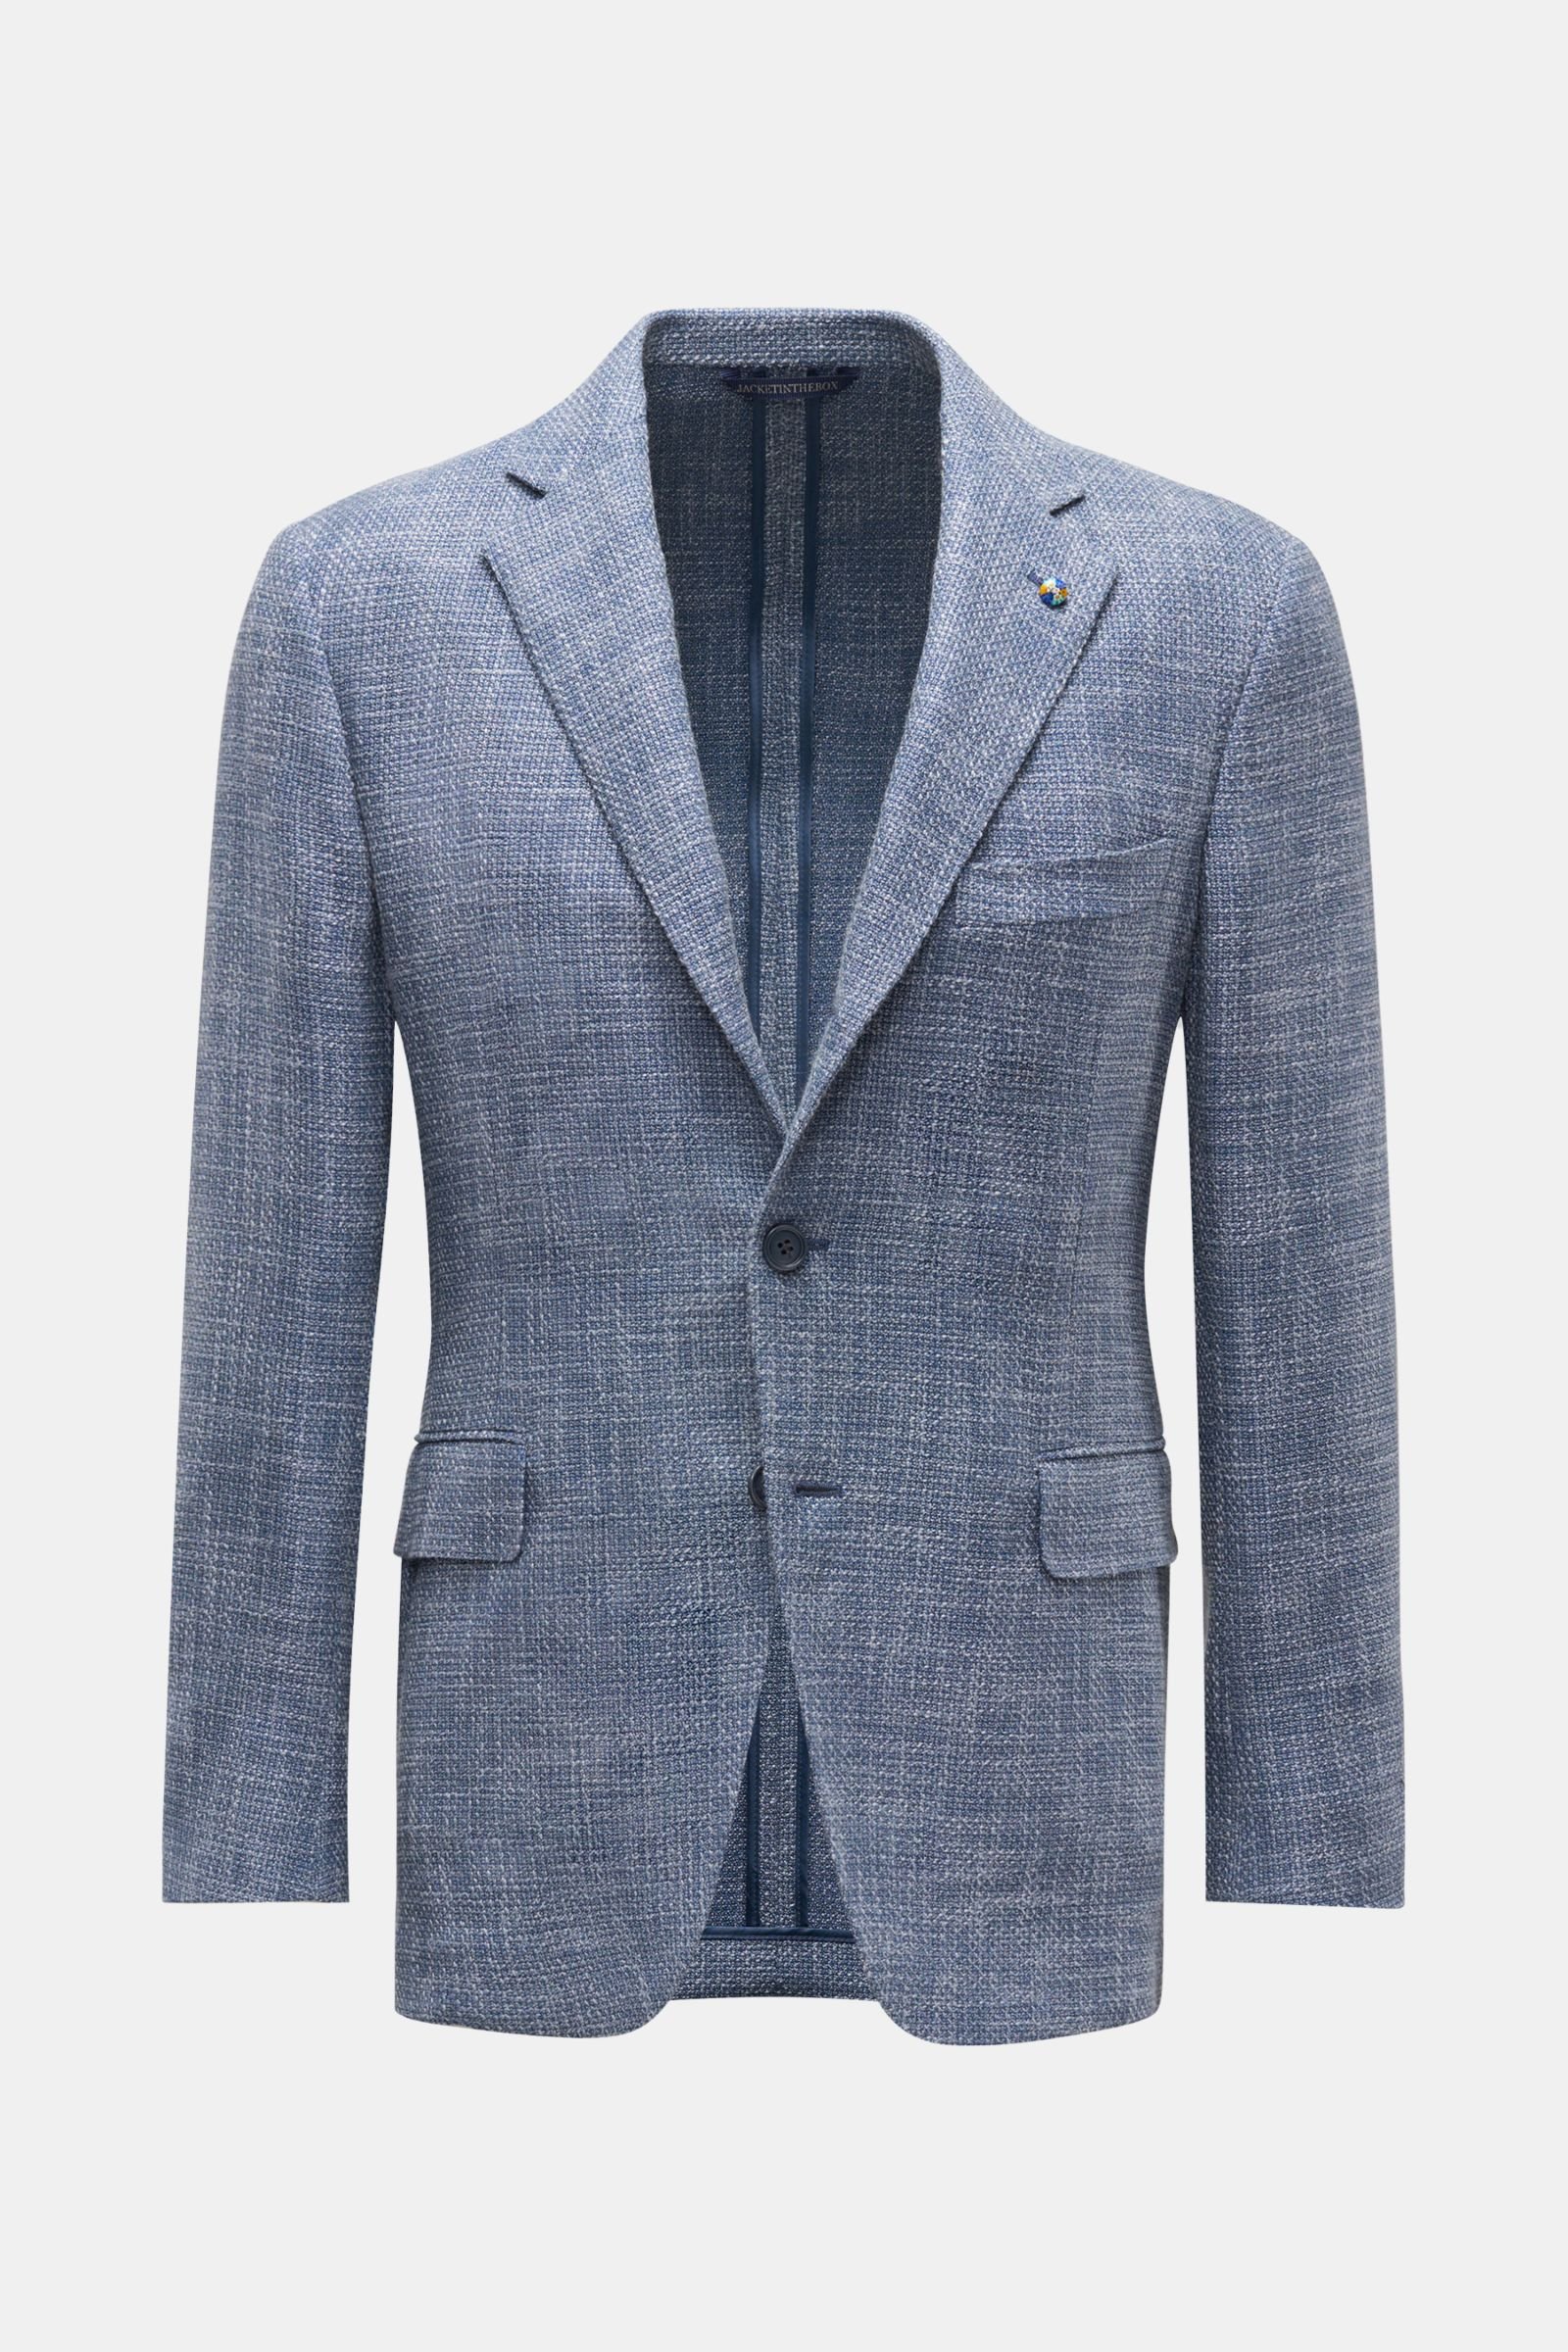 Smart-casual jacket 'Sean' smoky blue patterned